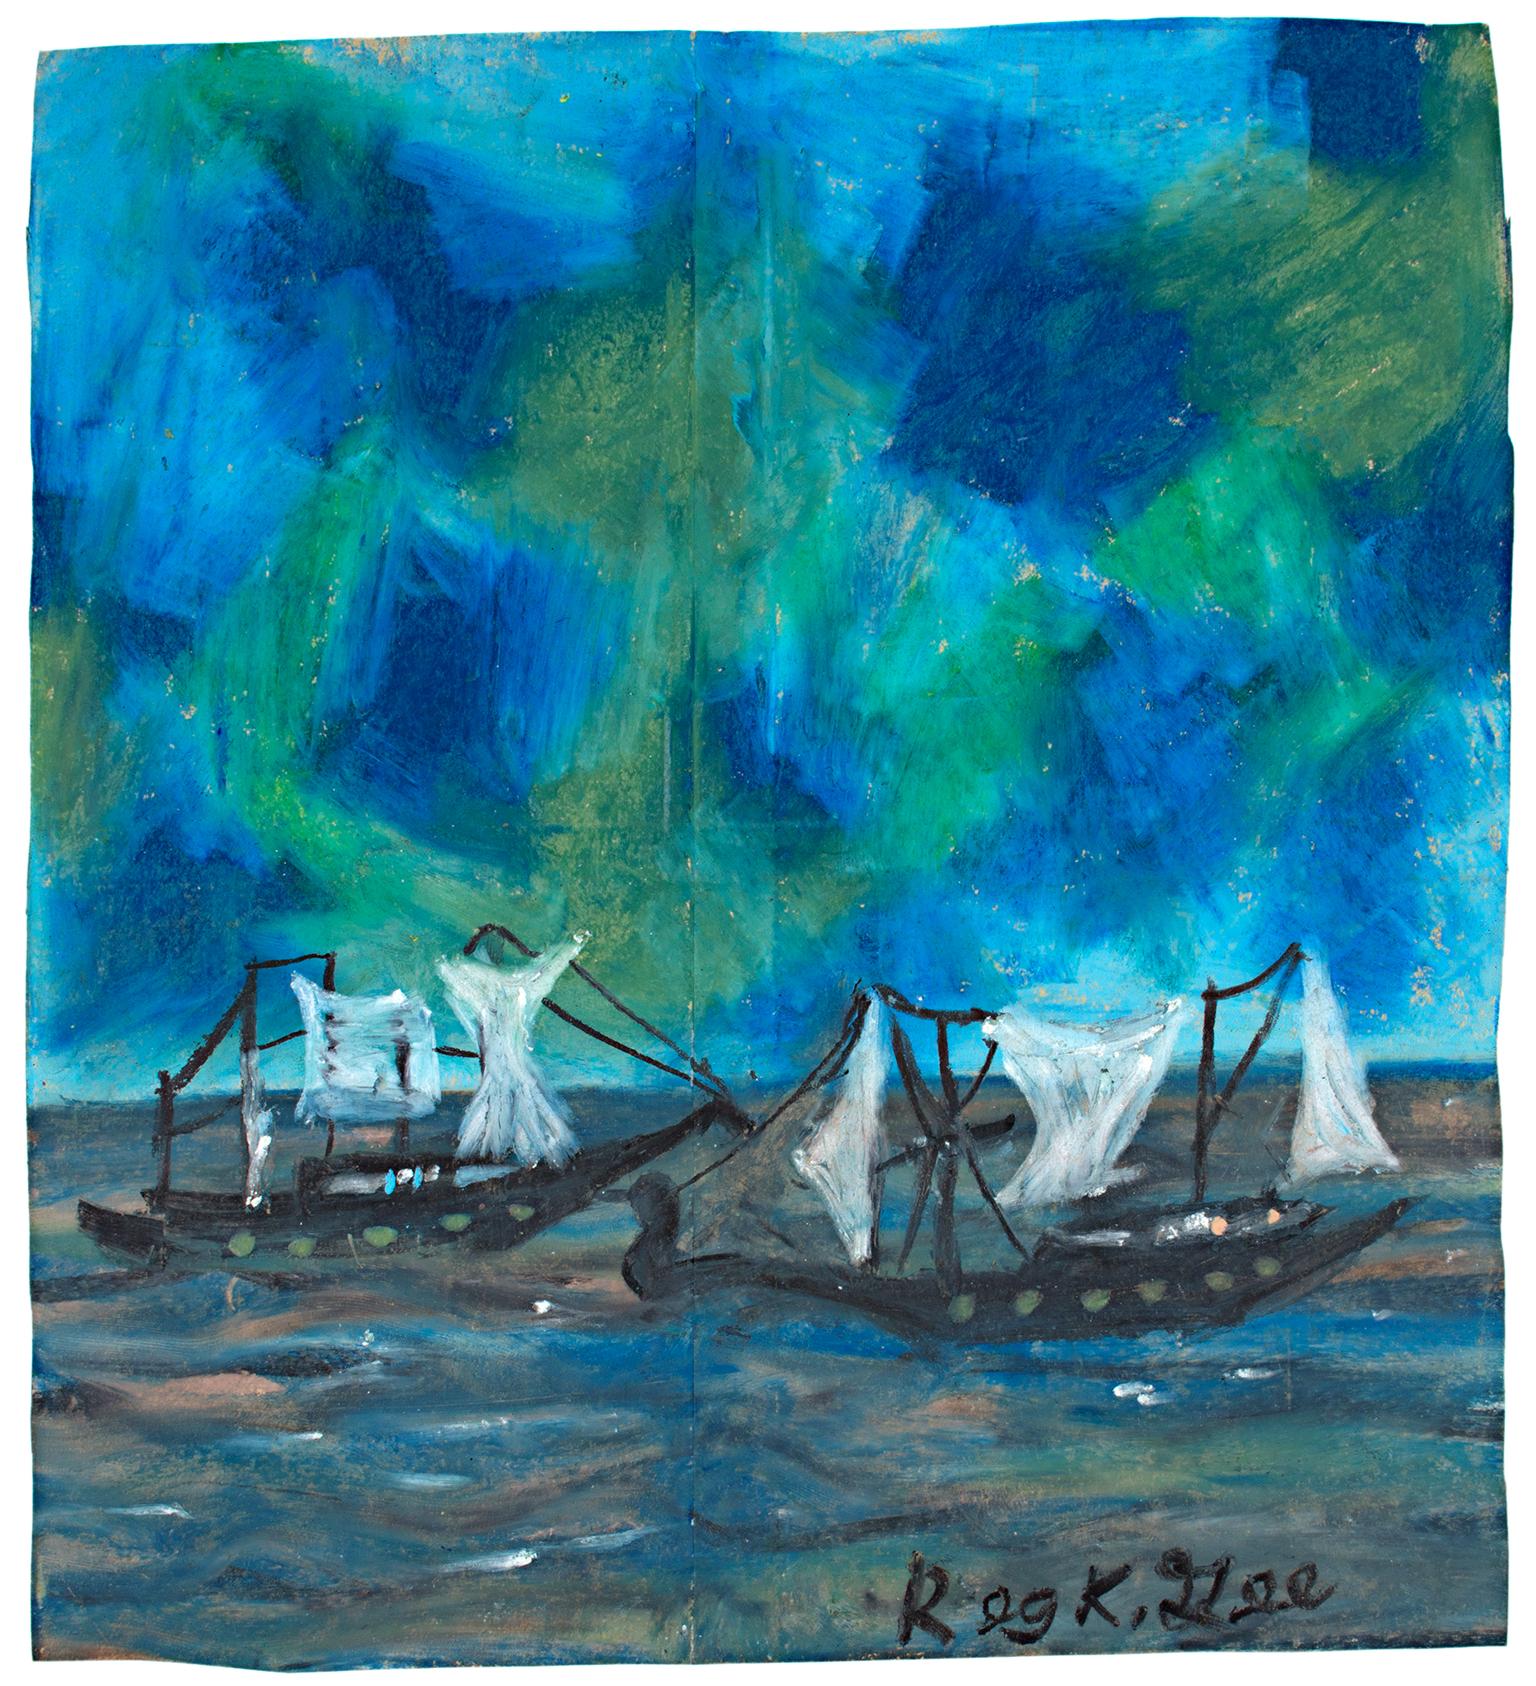 Reginald K. Gee, "On Lake Huron, 1956 B.C., " Oil Pastel on Grocery Bag signed by Reginald K. Gee, 1999